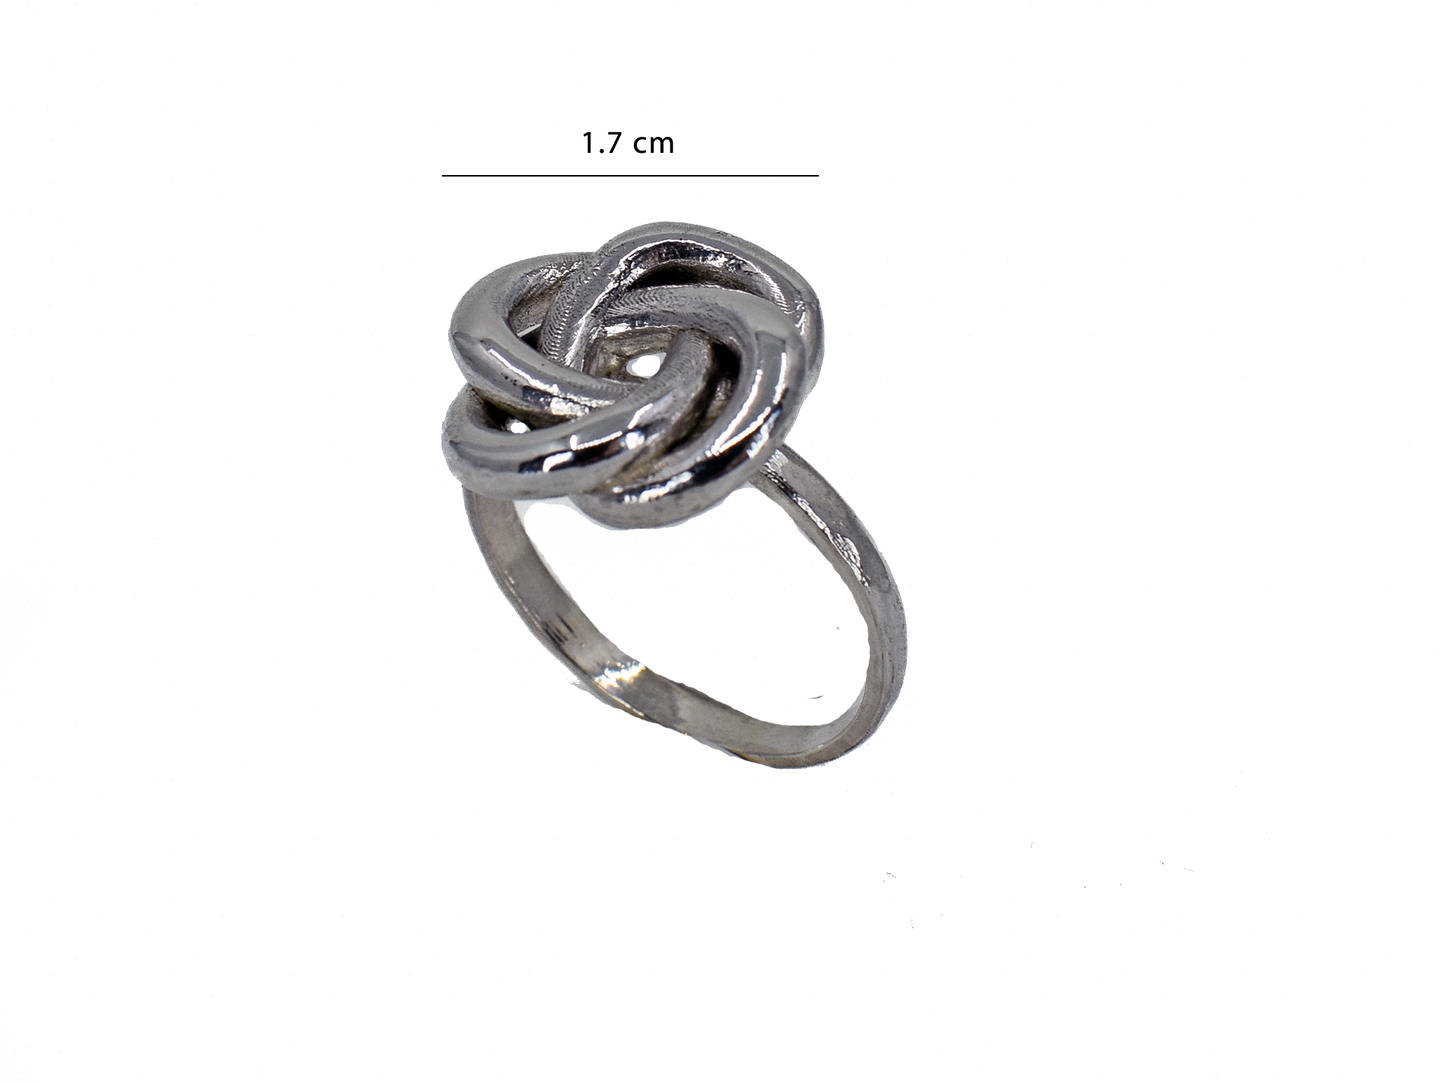 Celtic Knot - Handmade Silver Ring